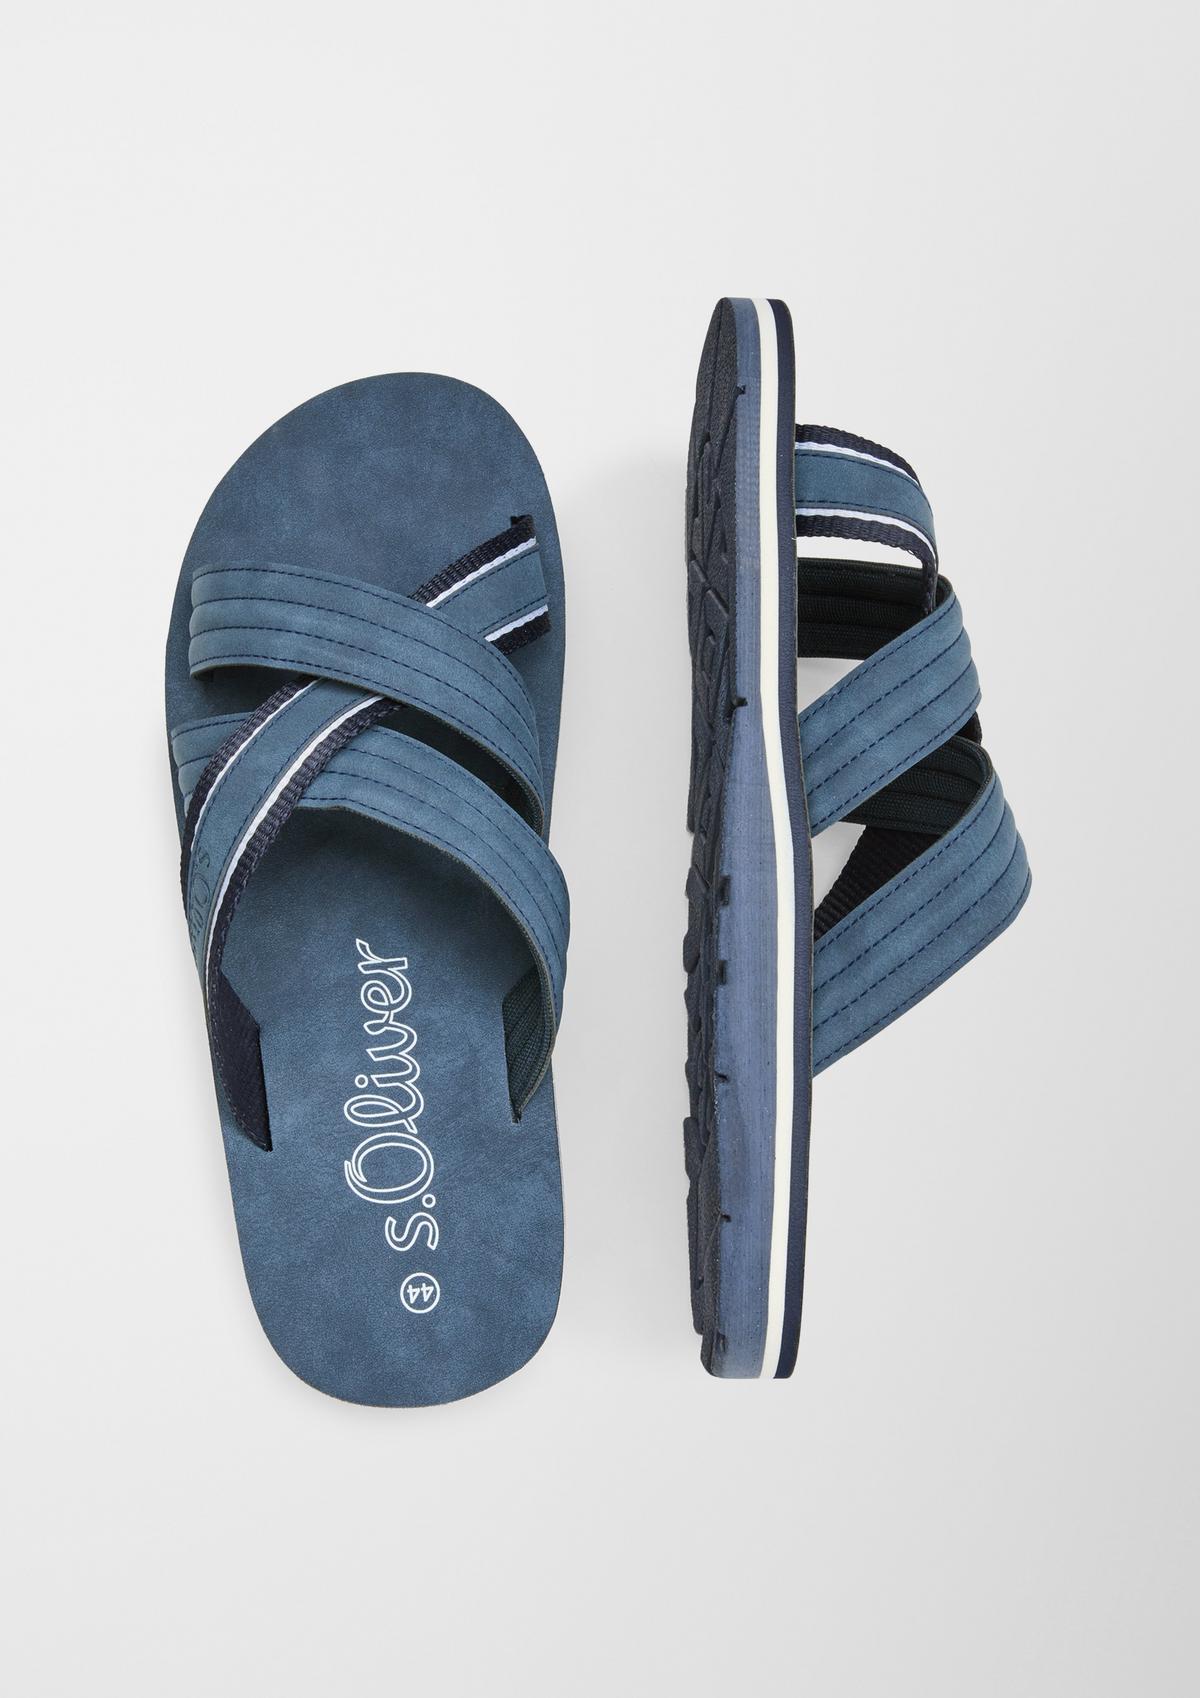 s.Oliver Criss cross slippers